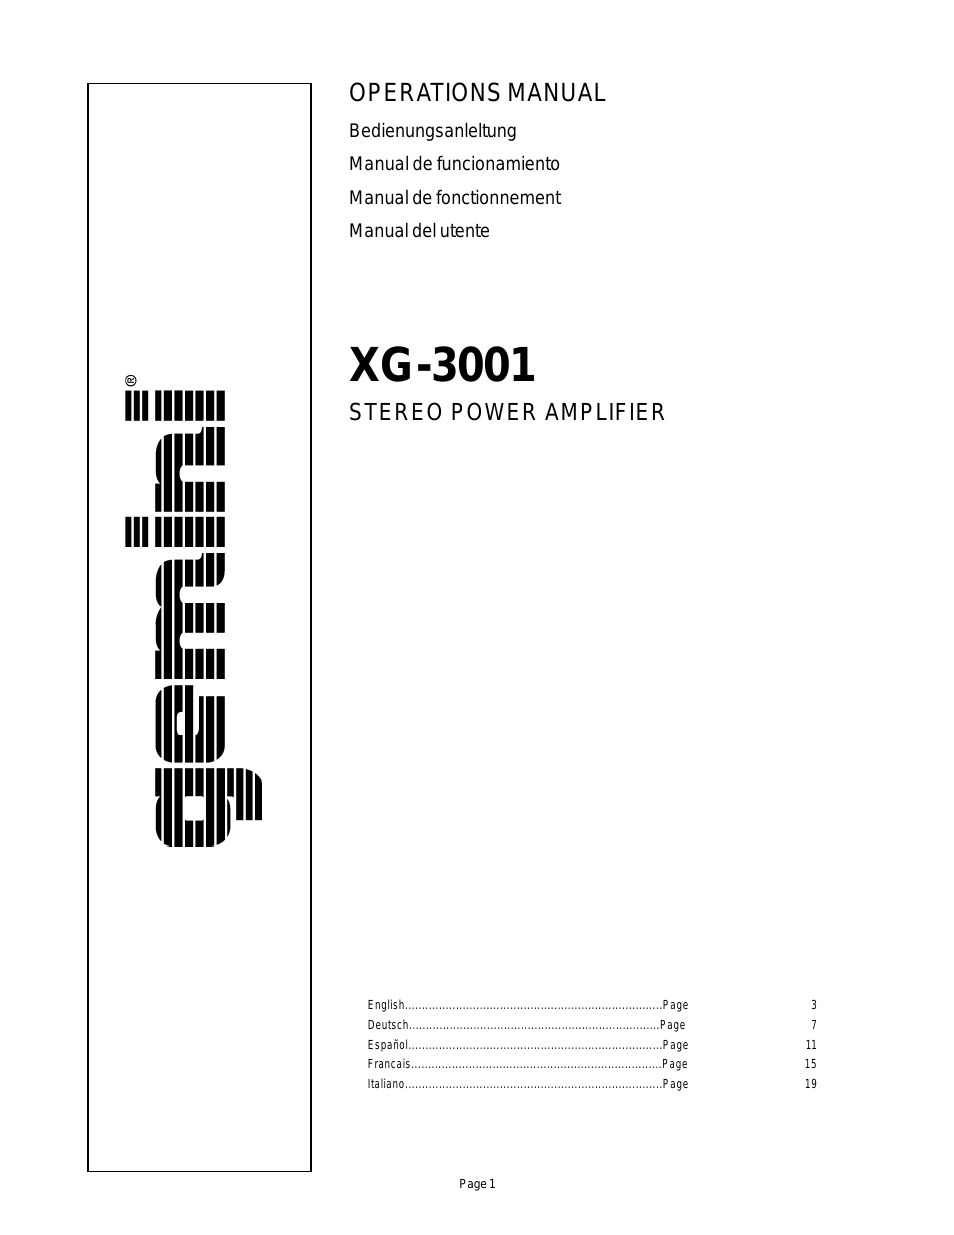 XG-3001